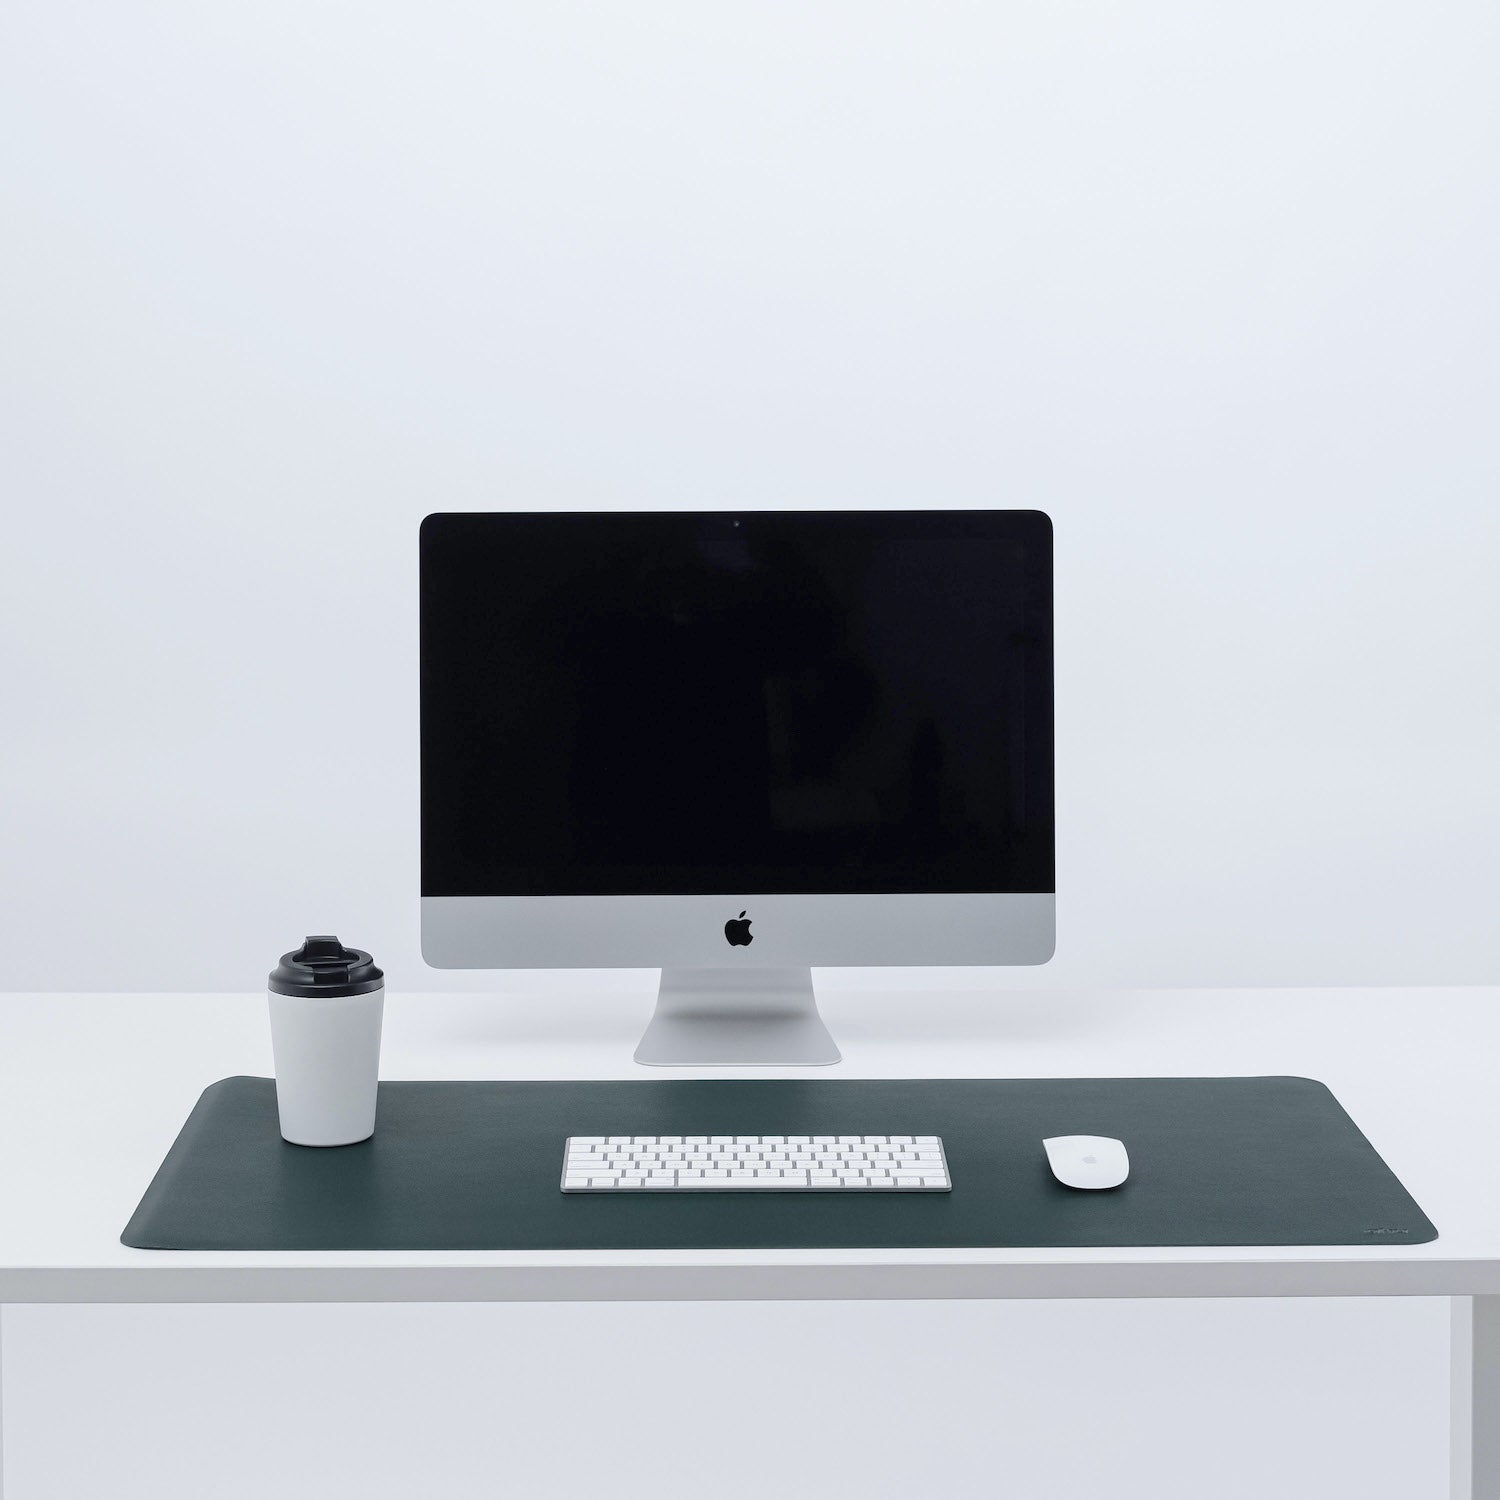 EziCarry by gku™ Office Desk Mat Mouse Pad | gku.